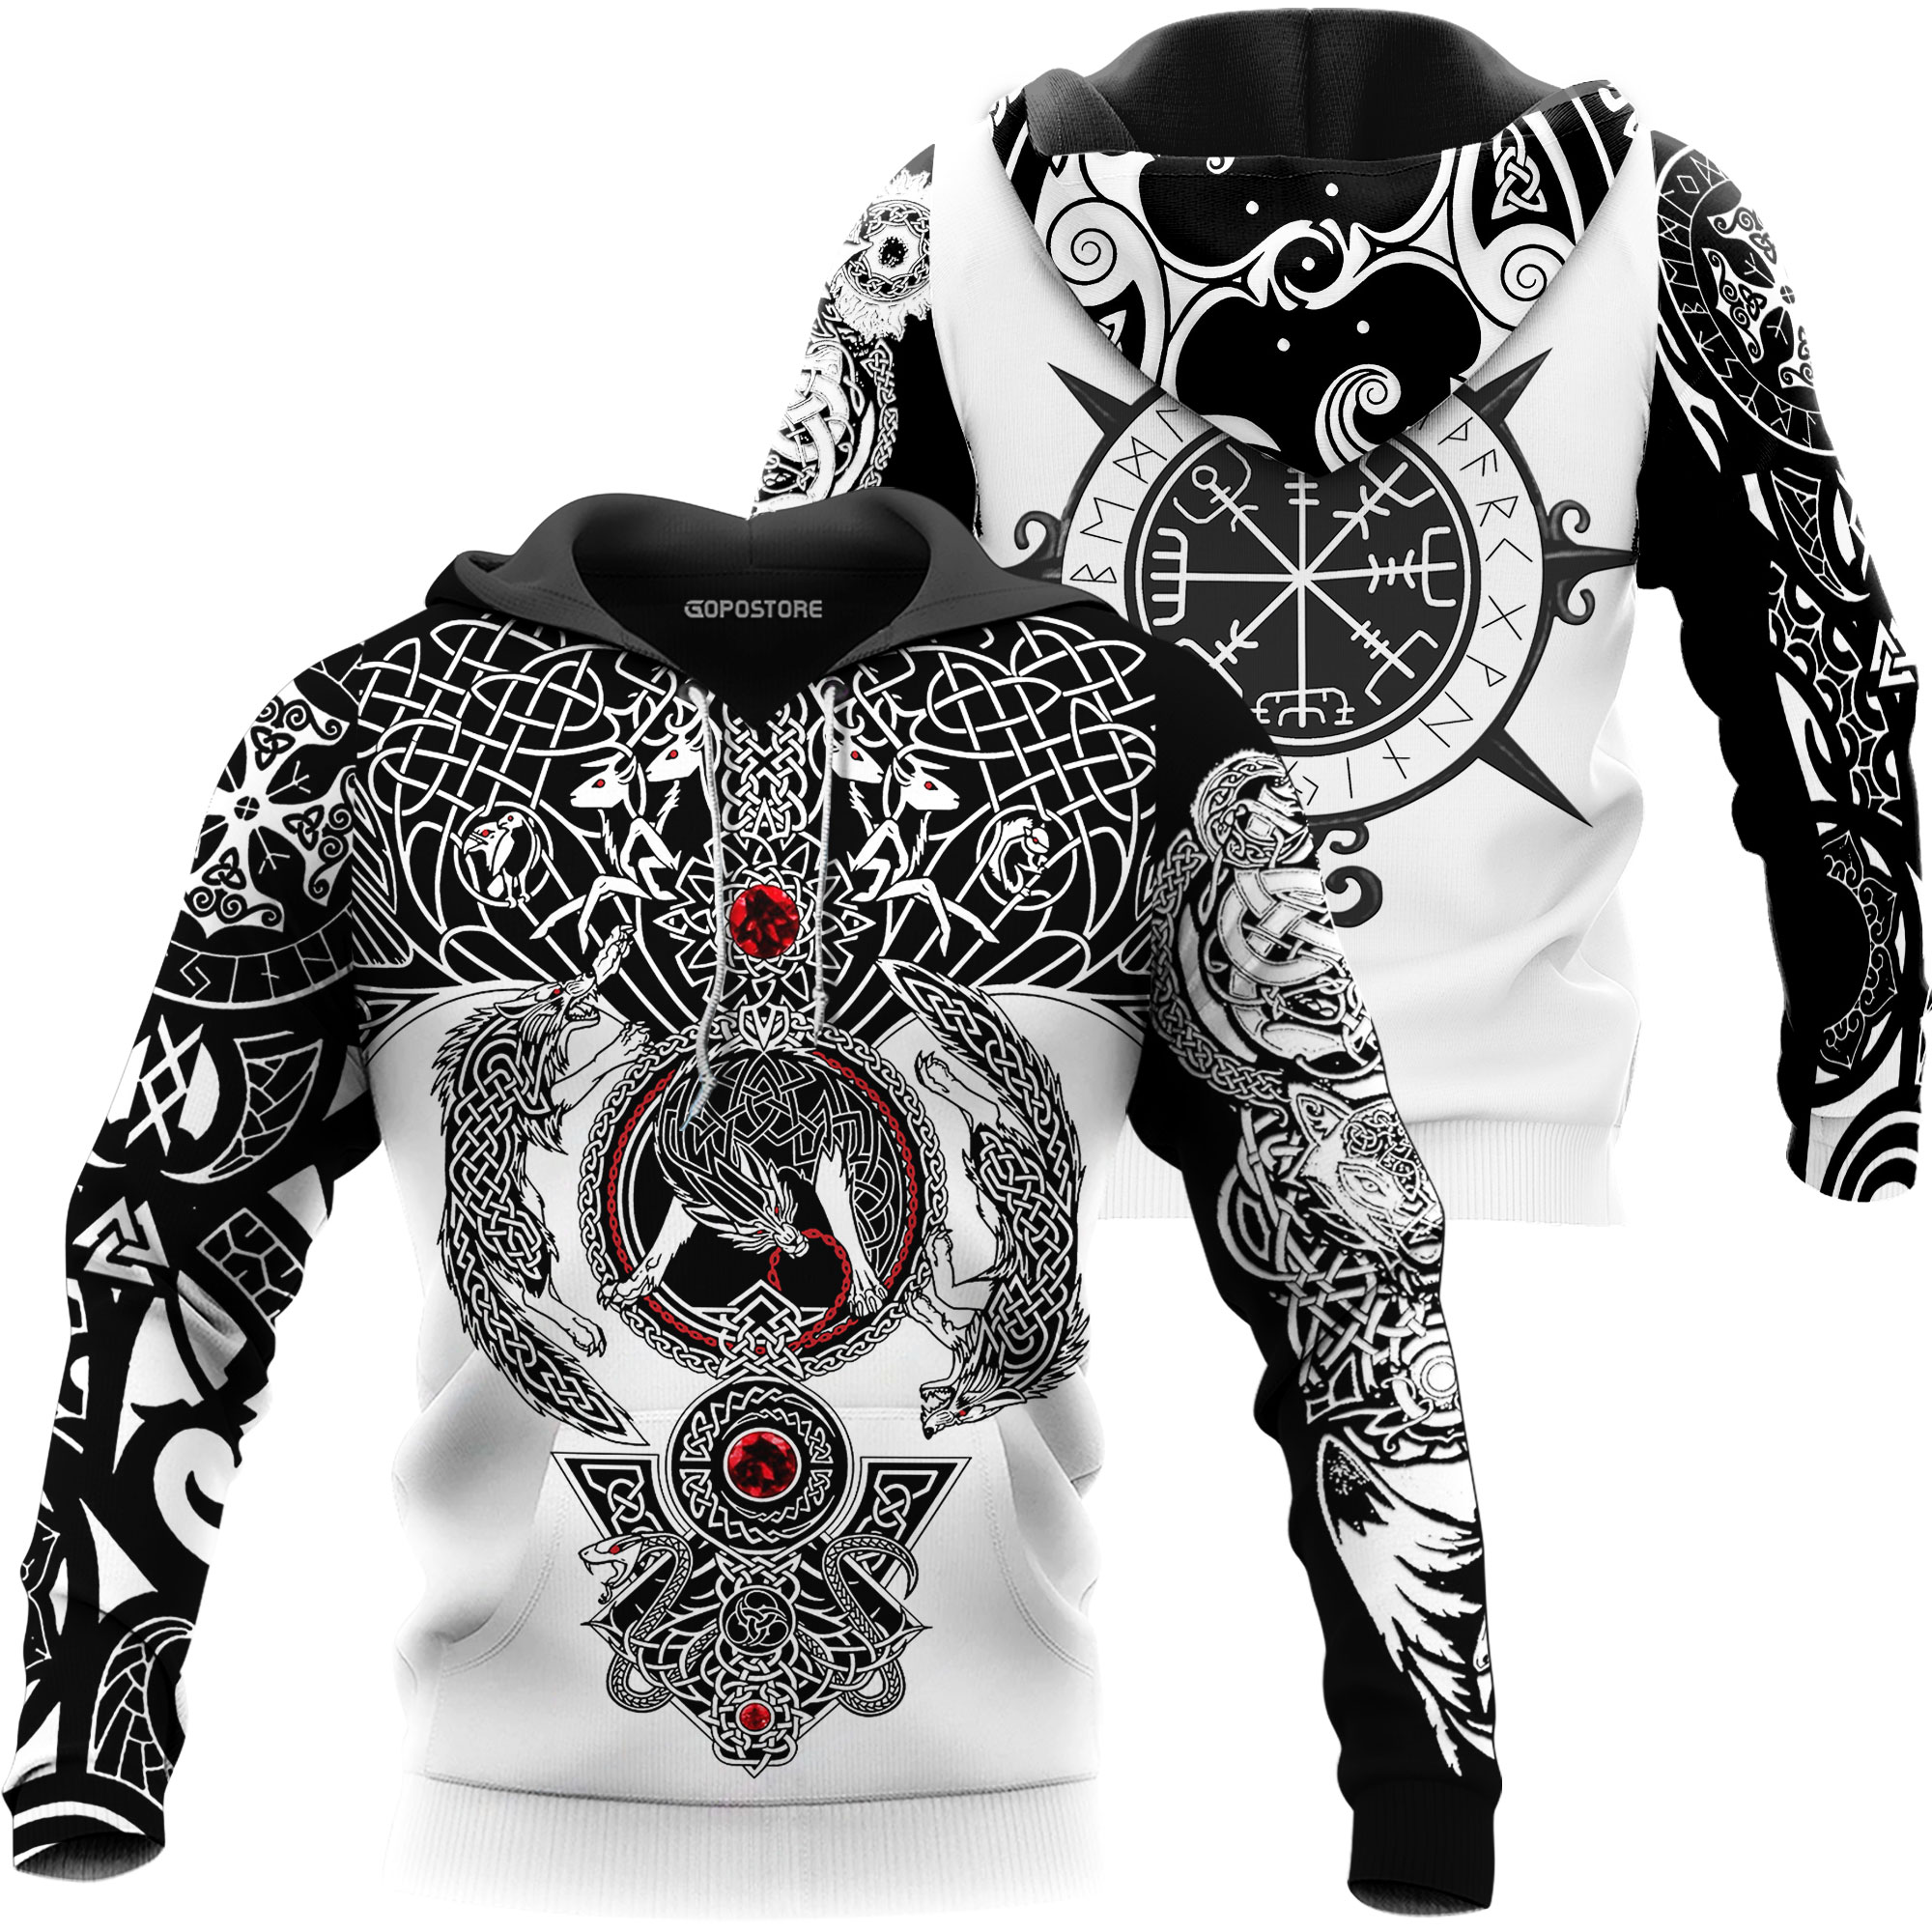 The viking wolf tattoo art 3d full printing 3D shirt- maria